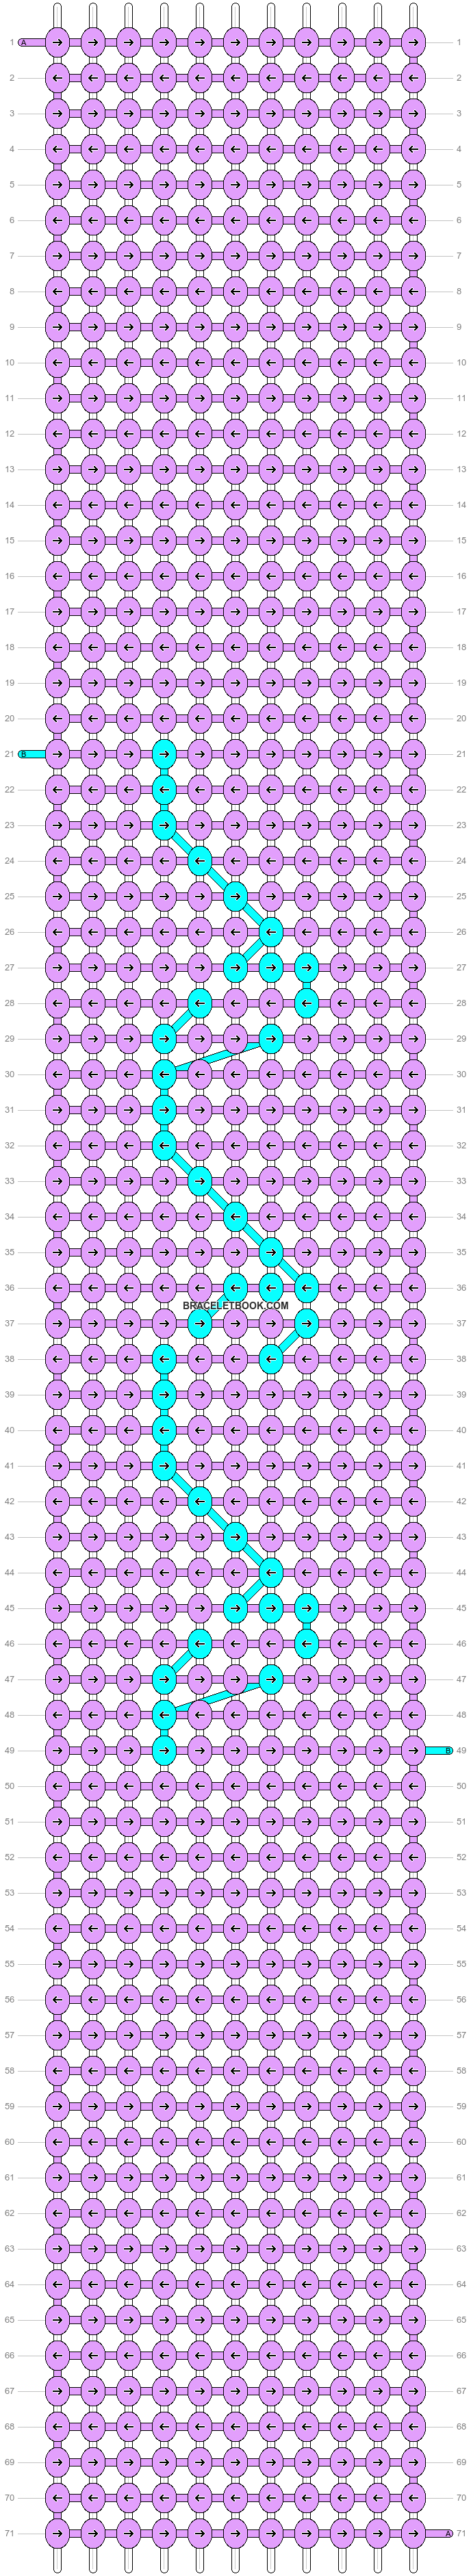 Alpha pattern #38672 variation #44314 pattern